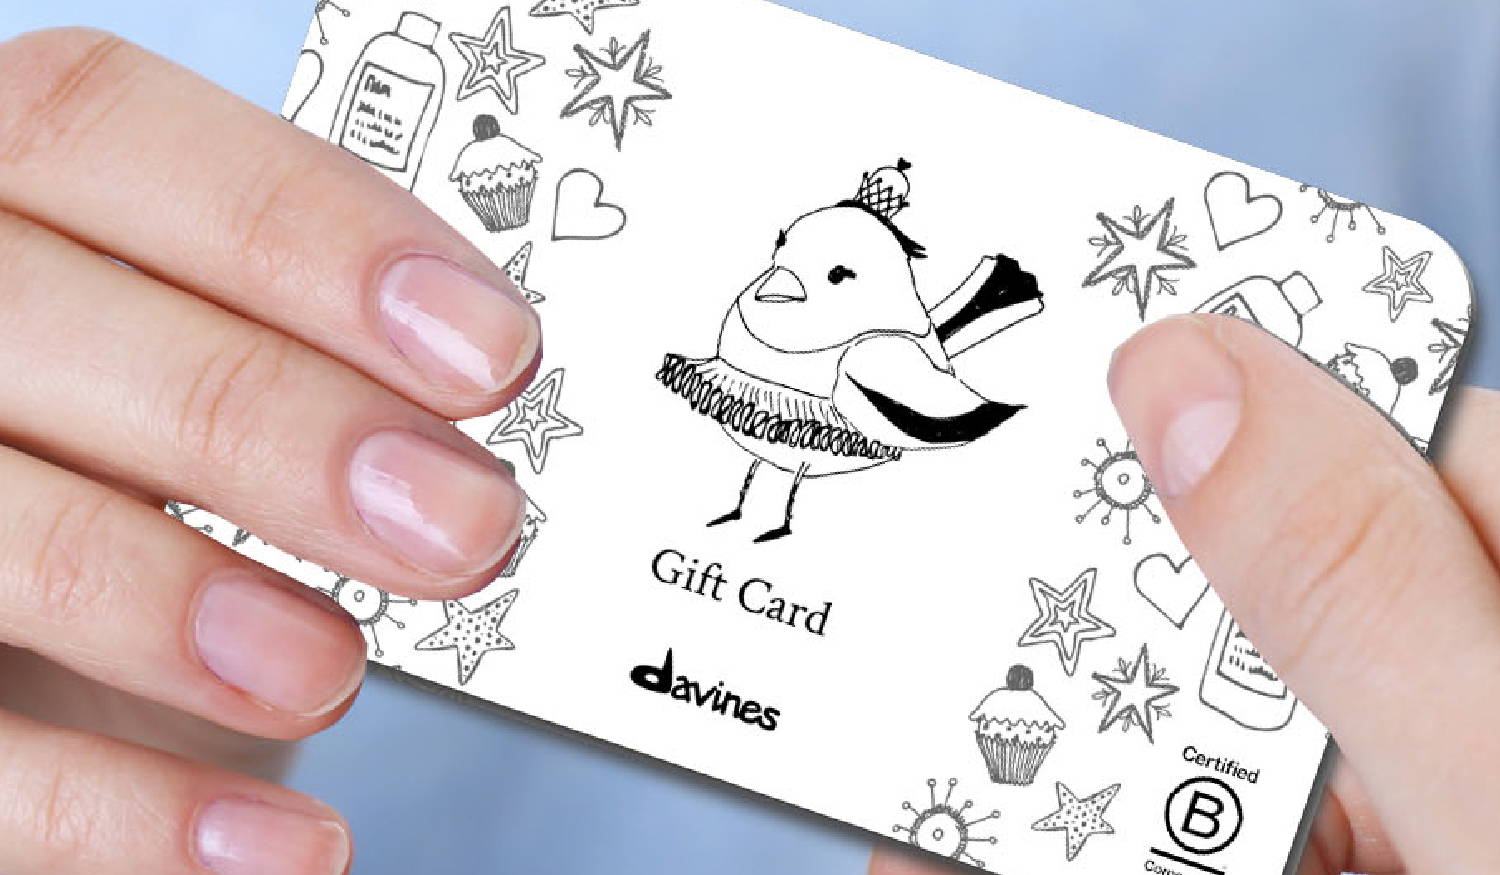 Gift card Davines